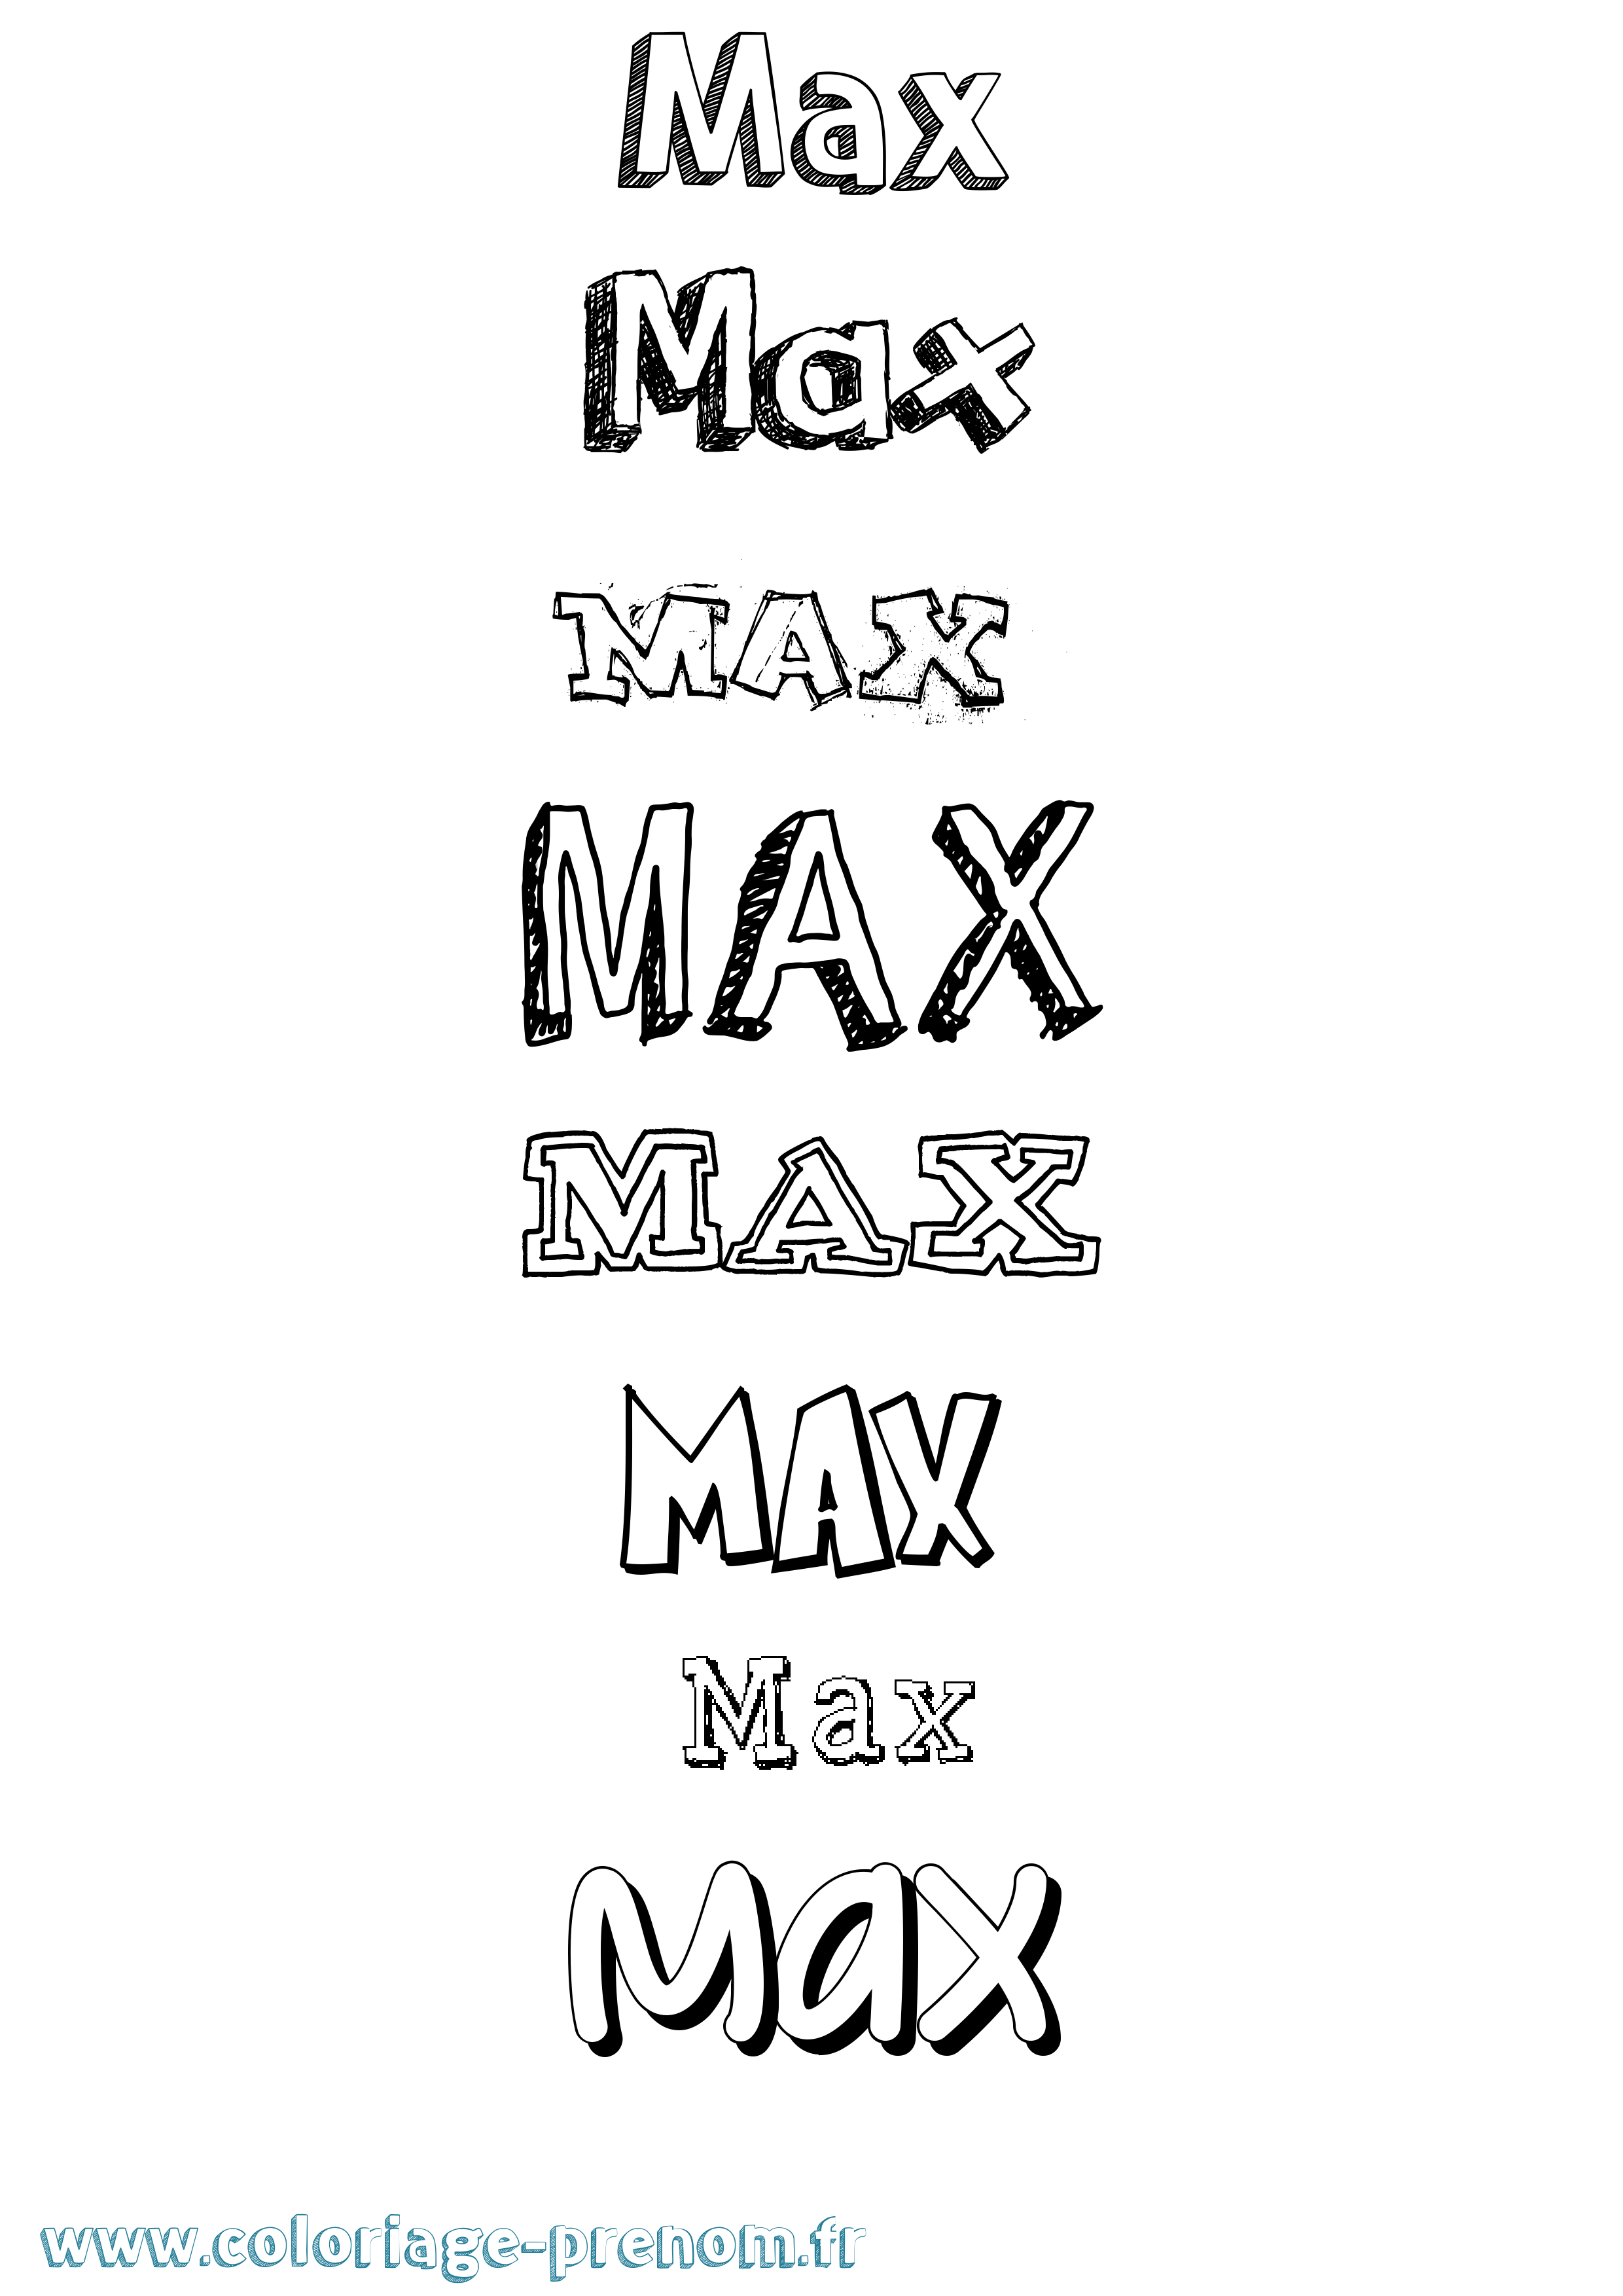 Coloriage prénom Max